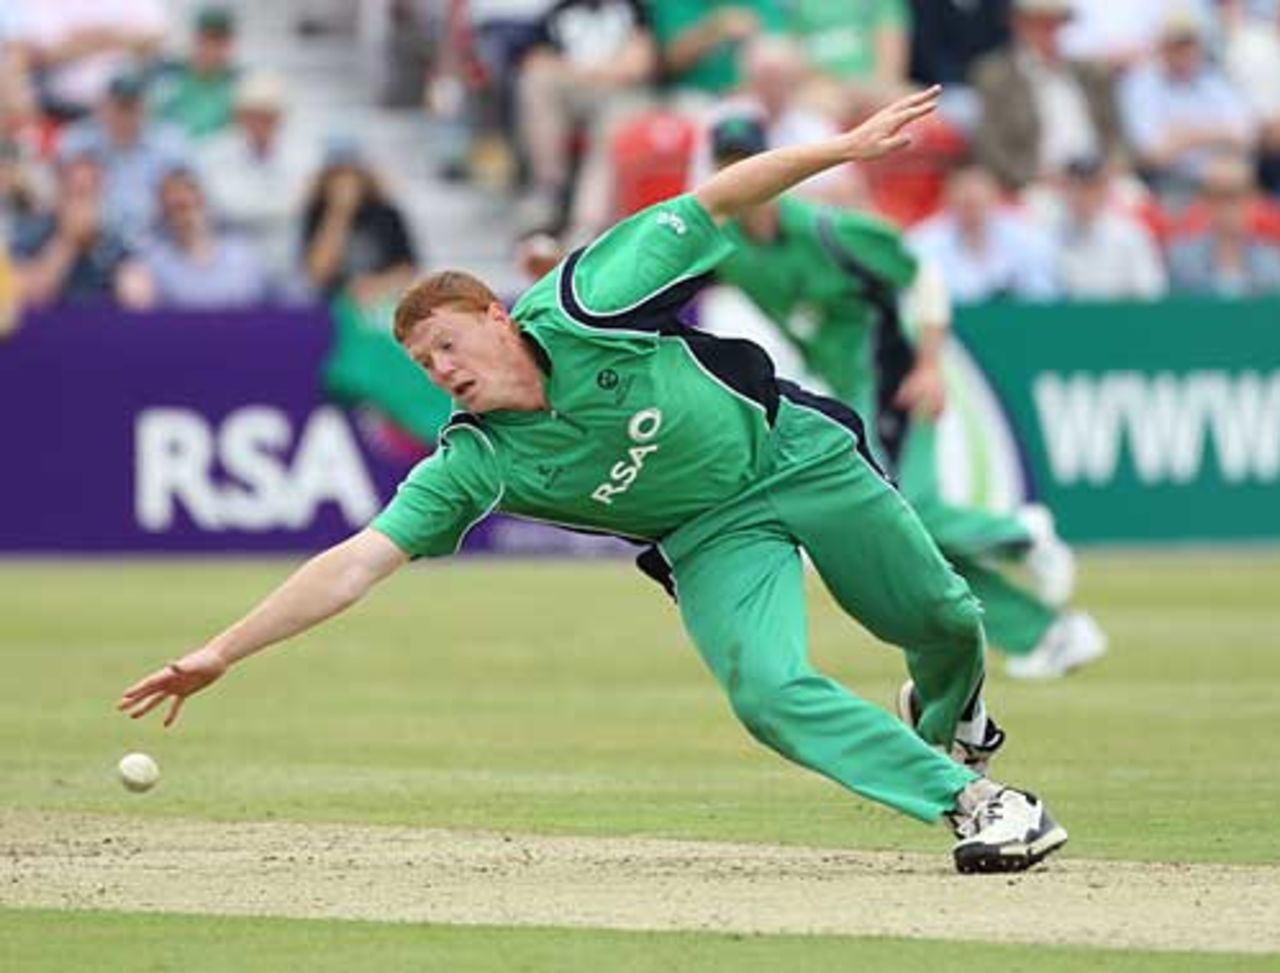 Kevin O'Brien trouble Australia with three wickets, Ireland v Australia, Only ODI, Dublin, June 17, 2010